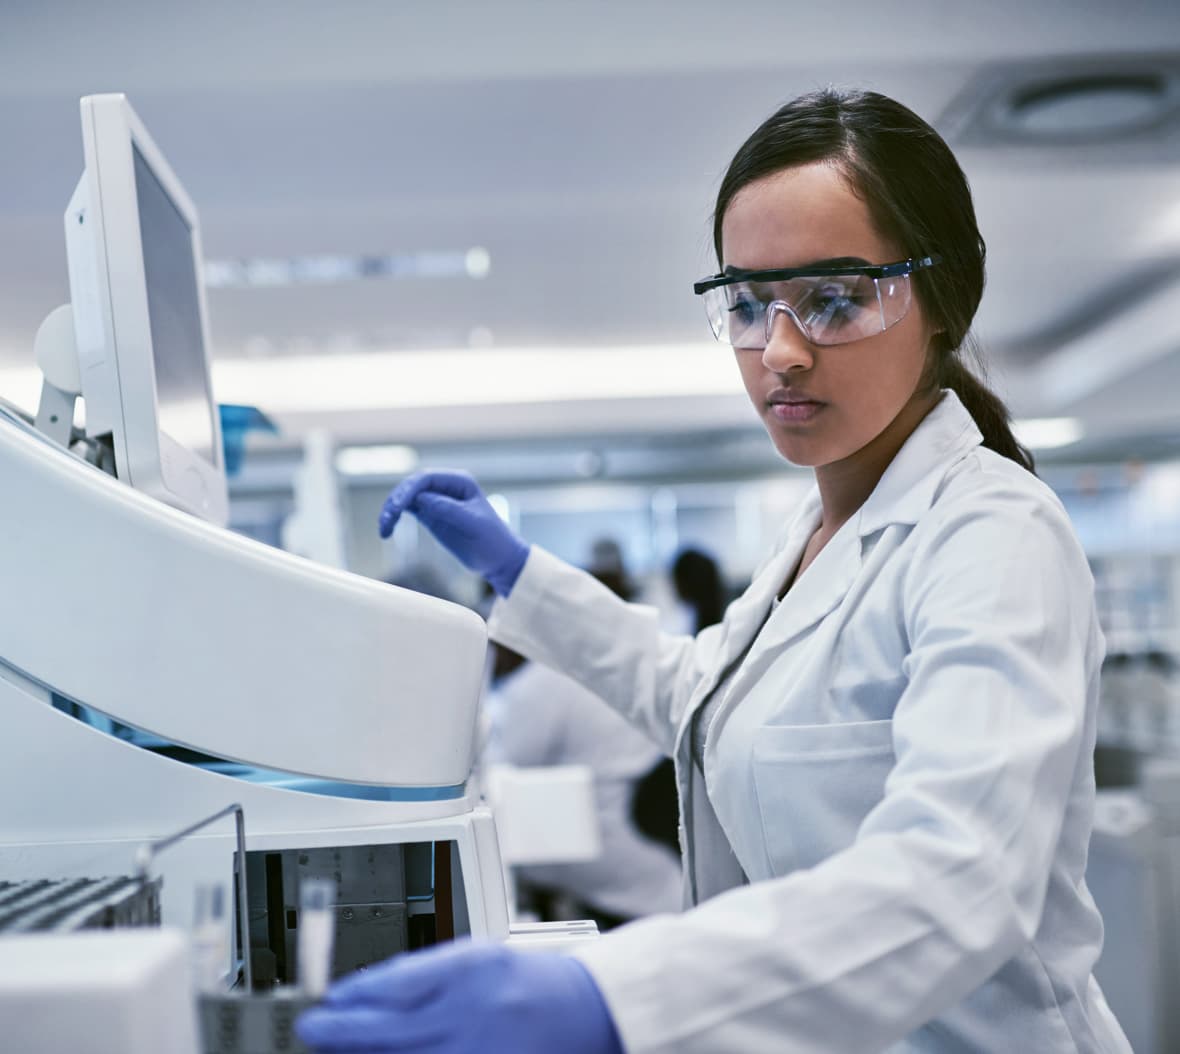 Female scientist working at laboratory equipment